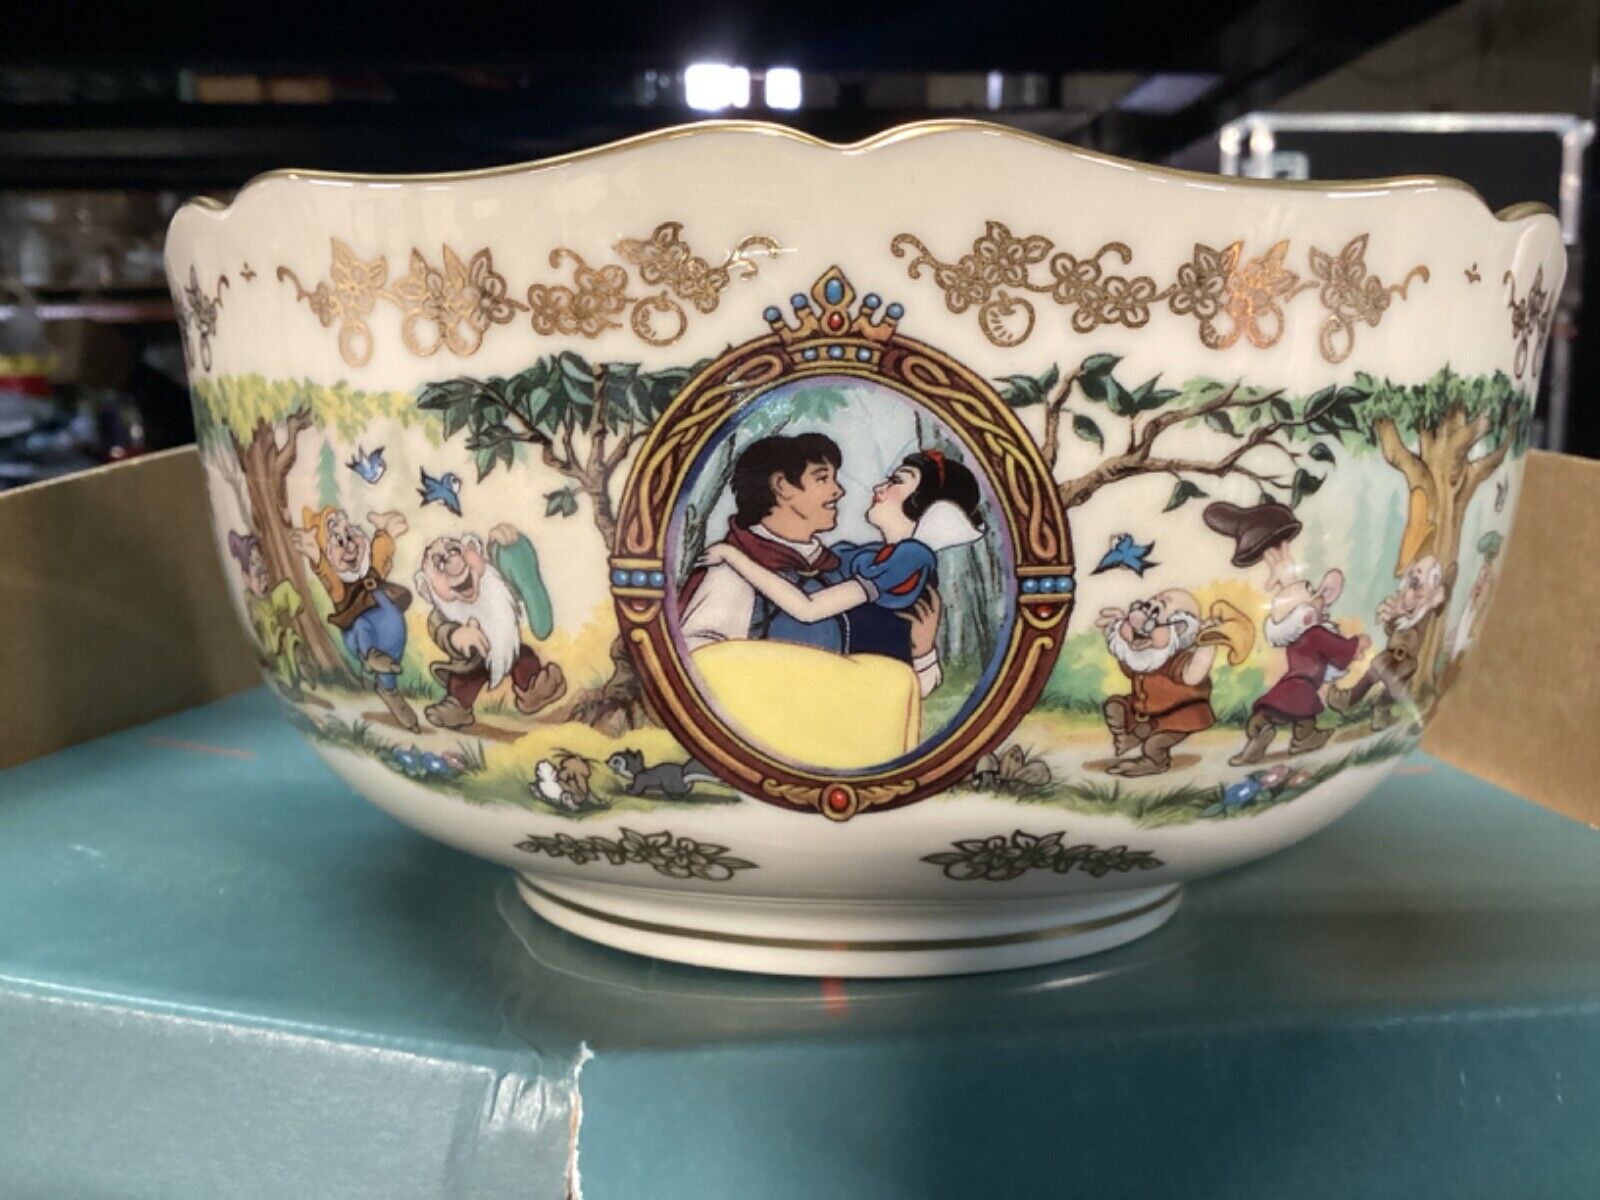 Disney Lenox 1996 Snow White Anniversary Bowl Limited Edition Decorative Bowl